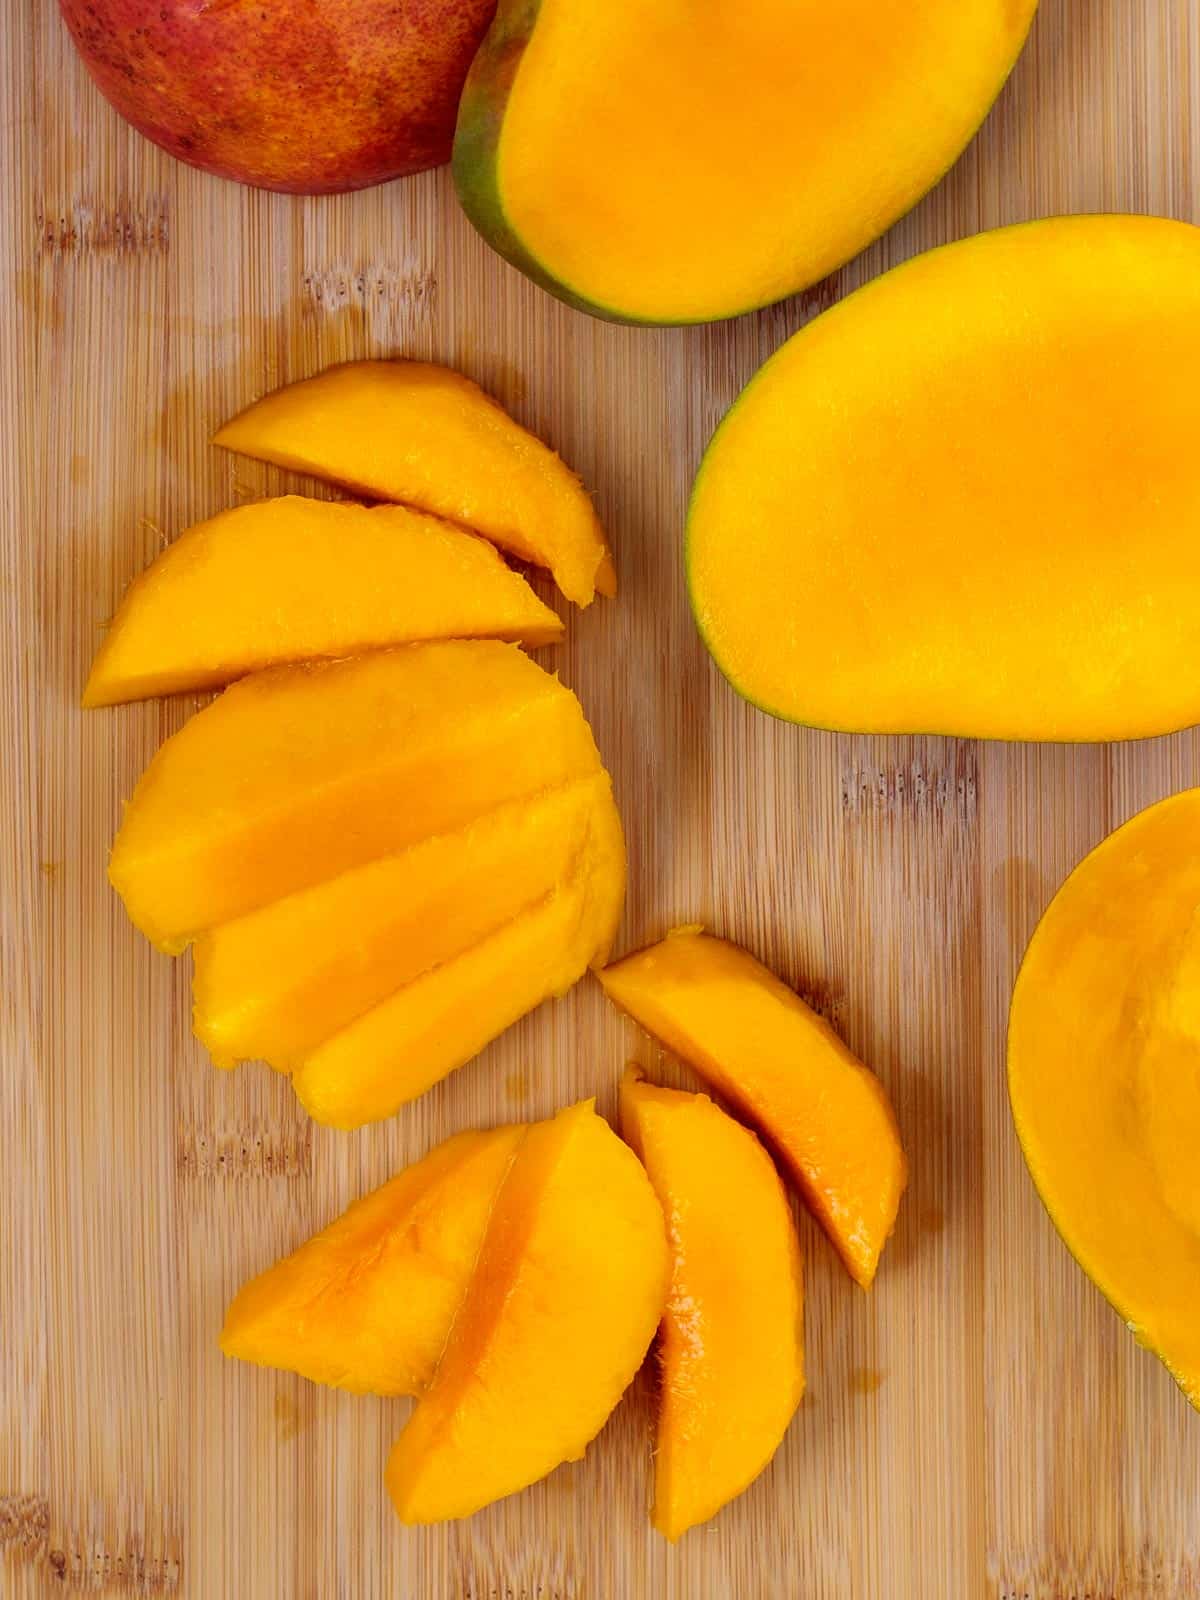 Thick slices of fresh raw mango.